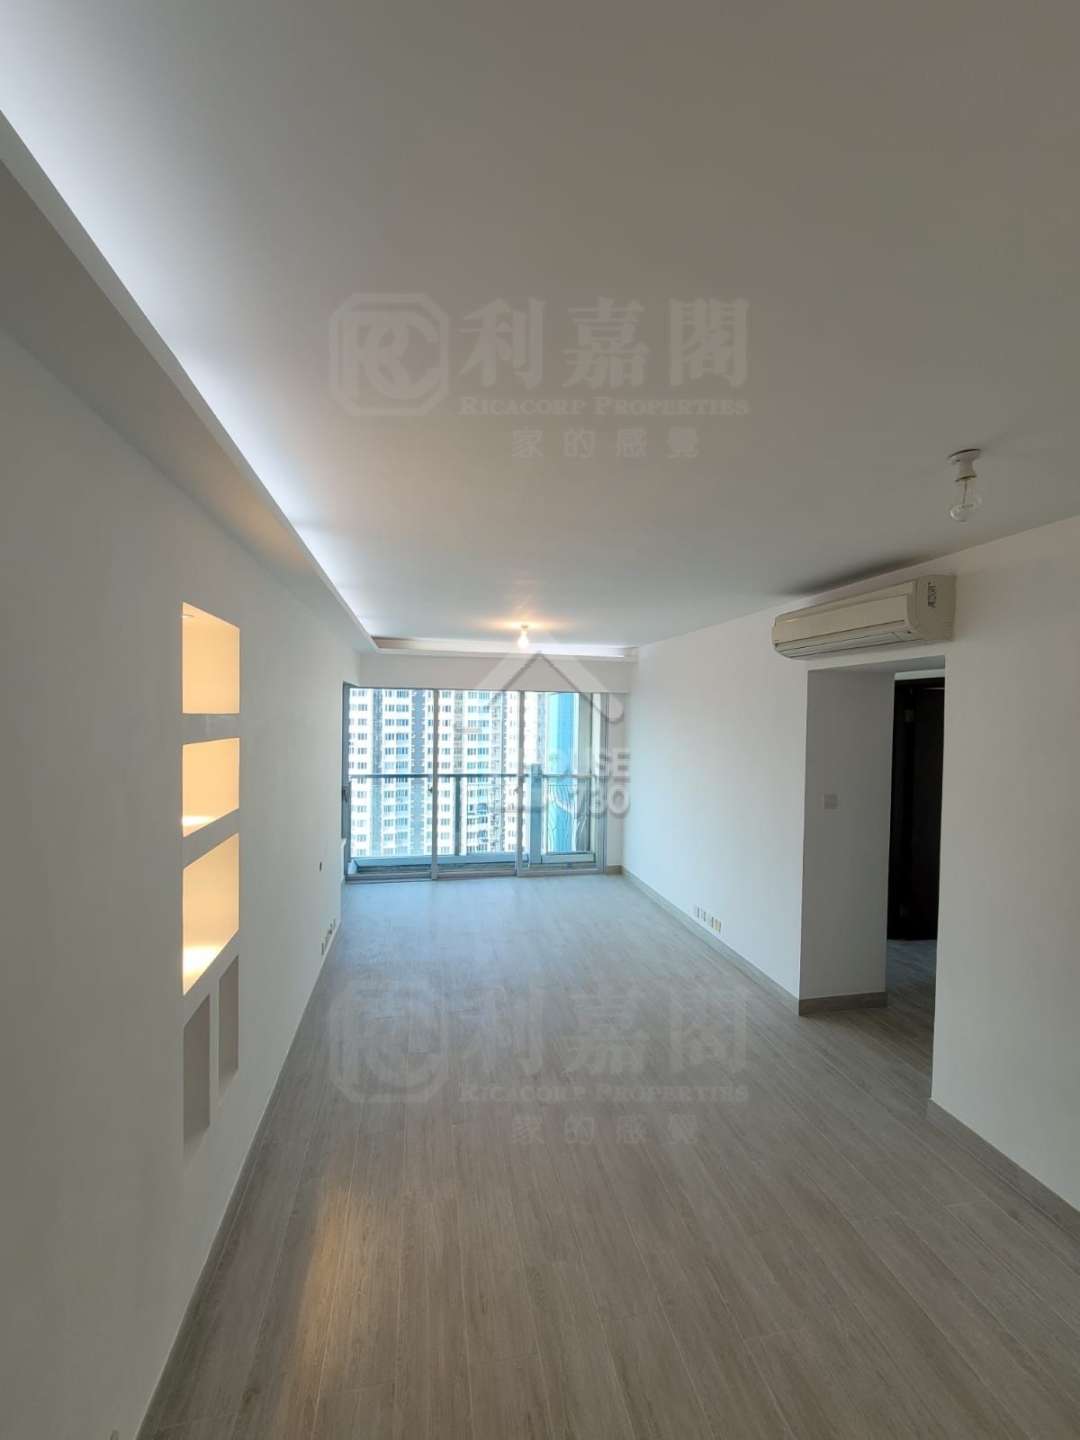 Wong Tai Sin BILLIONNAIRE ROYALE Middle Floor House730-7056353